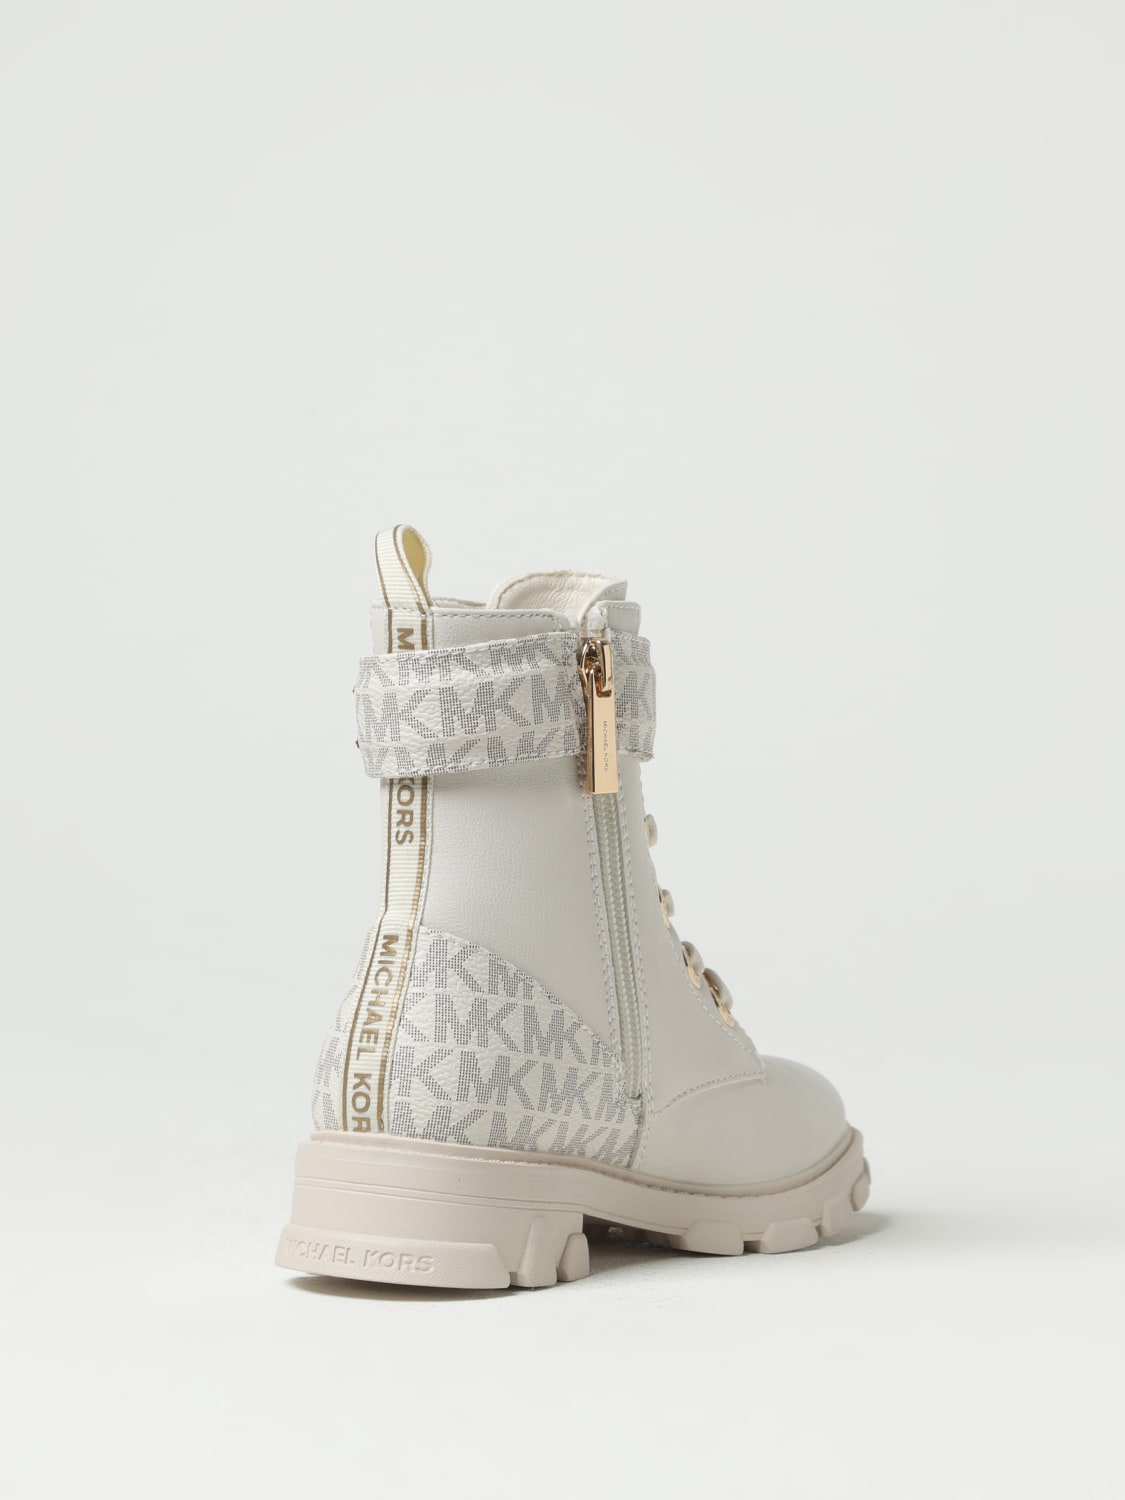 MICHAEL KORS: shoes for girls - Cream  Michael Kors shoes MK100789 online  at